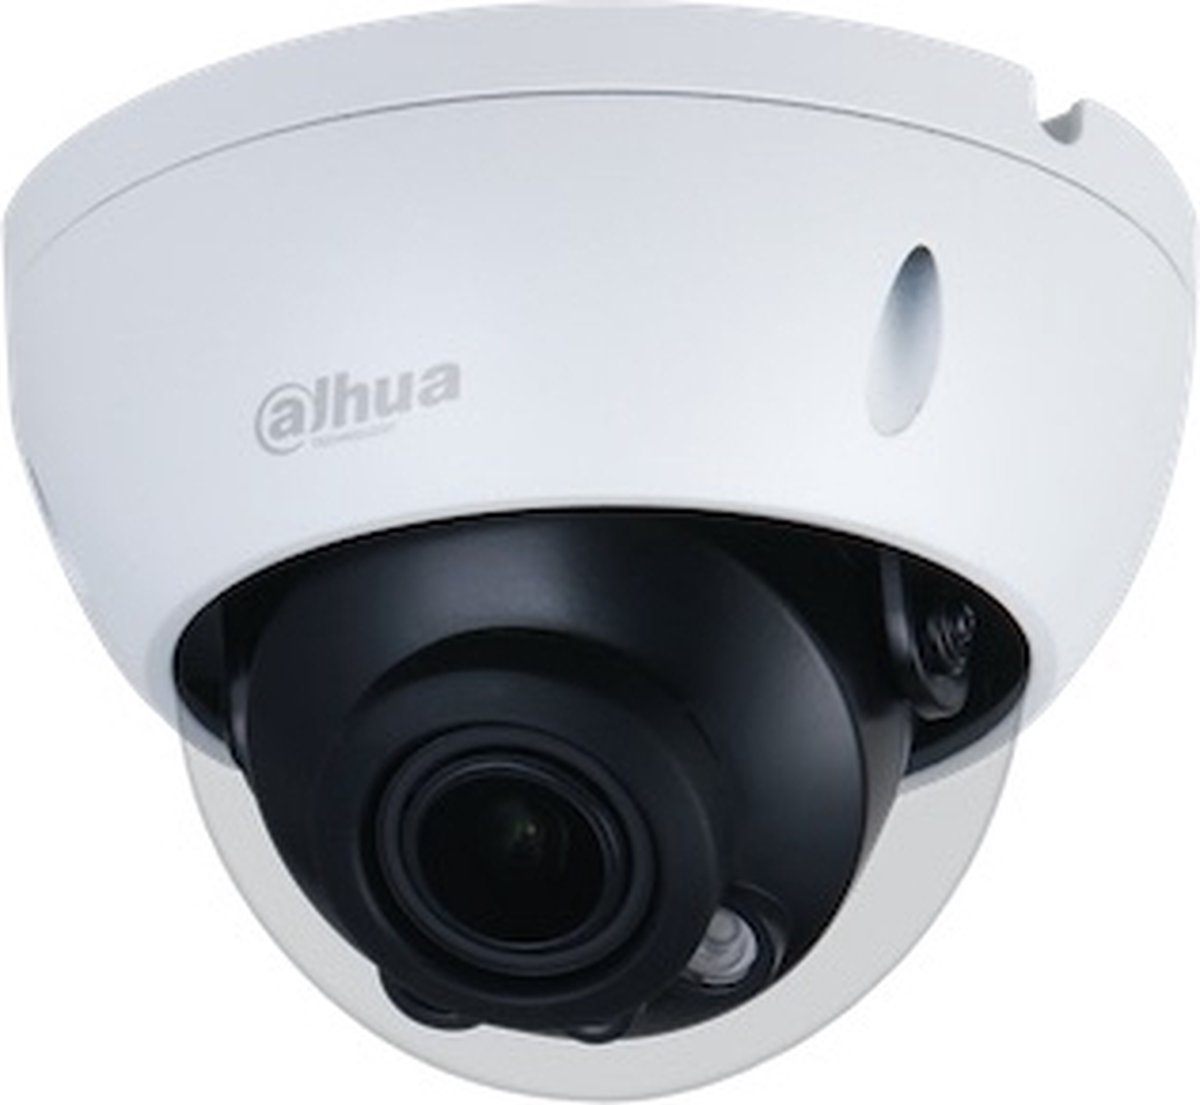 Dahua IPC-HDBW3541E-AS Full HD 5MP Starlight Lite AI buiten dome camera met 50m IR, PoE, microSD - Beveiligingscamera IP camera bewakingscamera camerabewaking veiligheidscamera beveiliging netwerk camera webcam